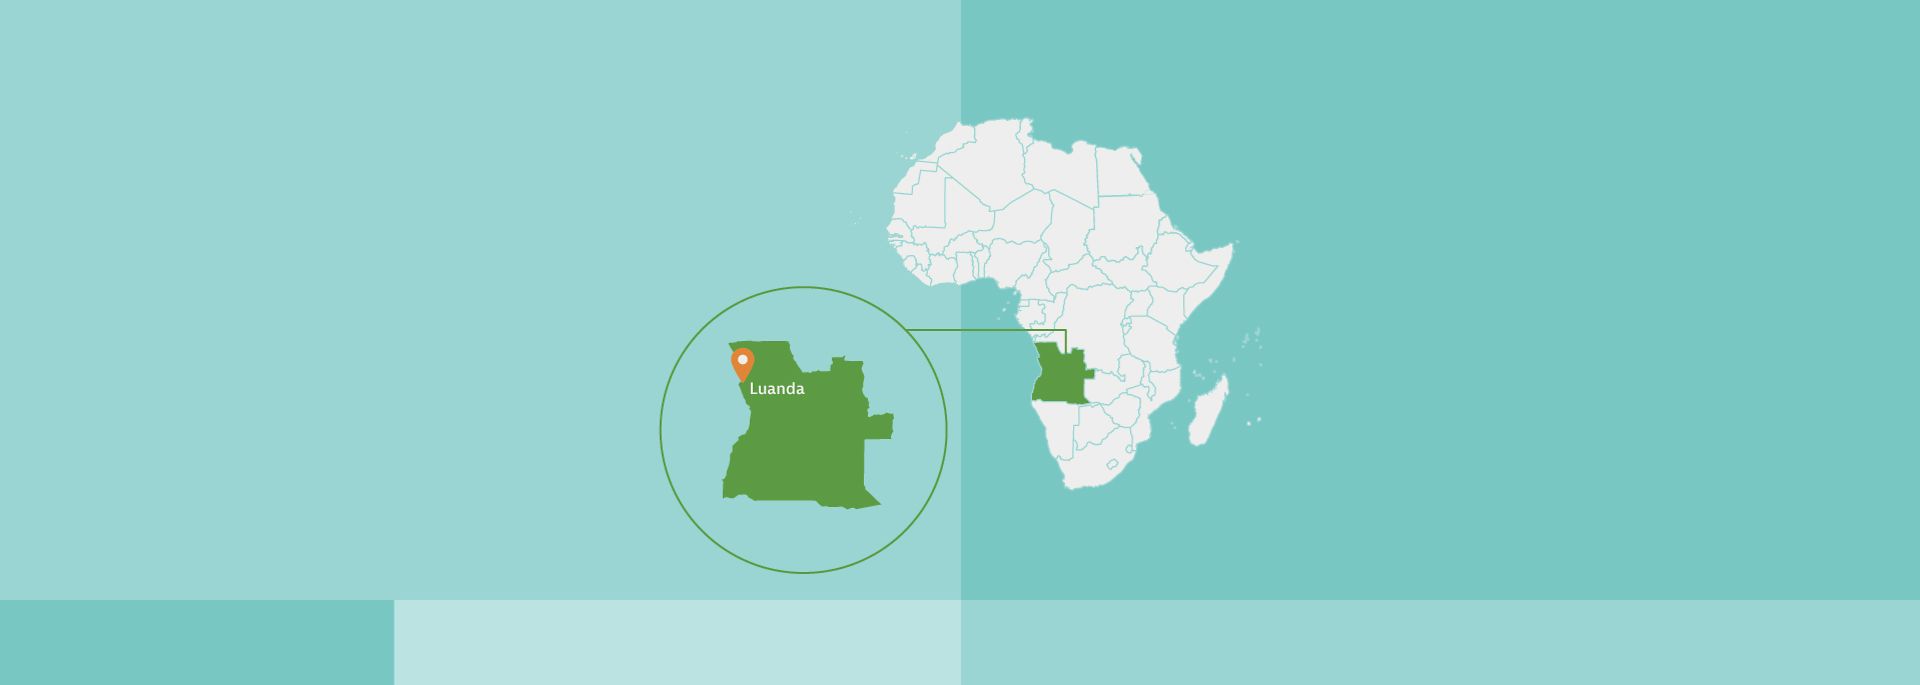 Afrikakarte, Angola